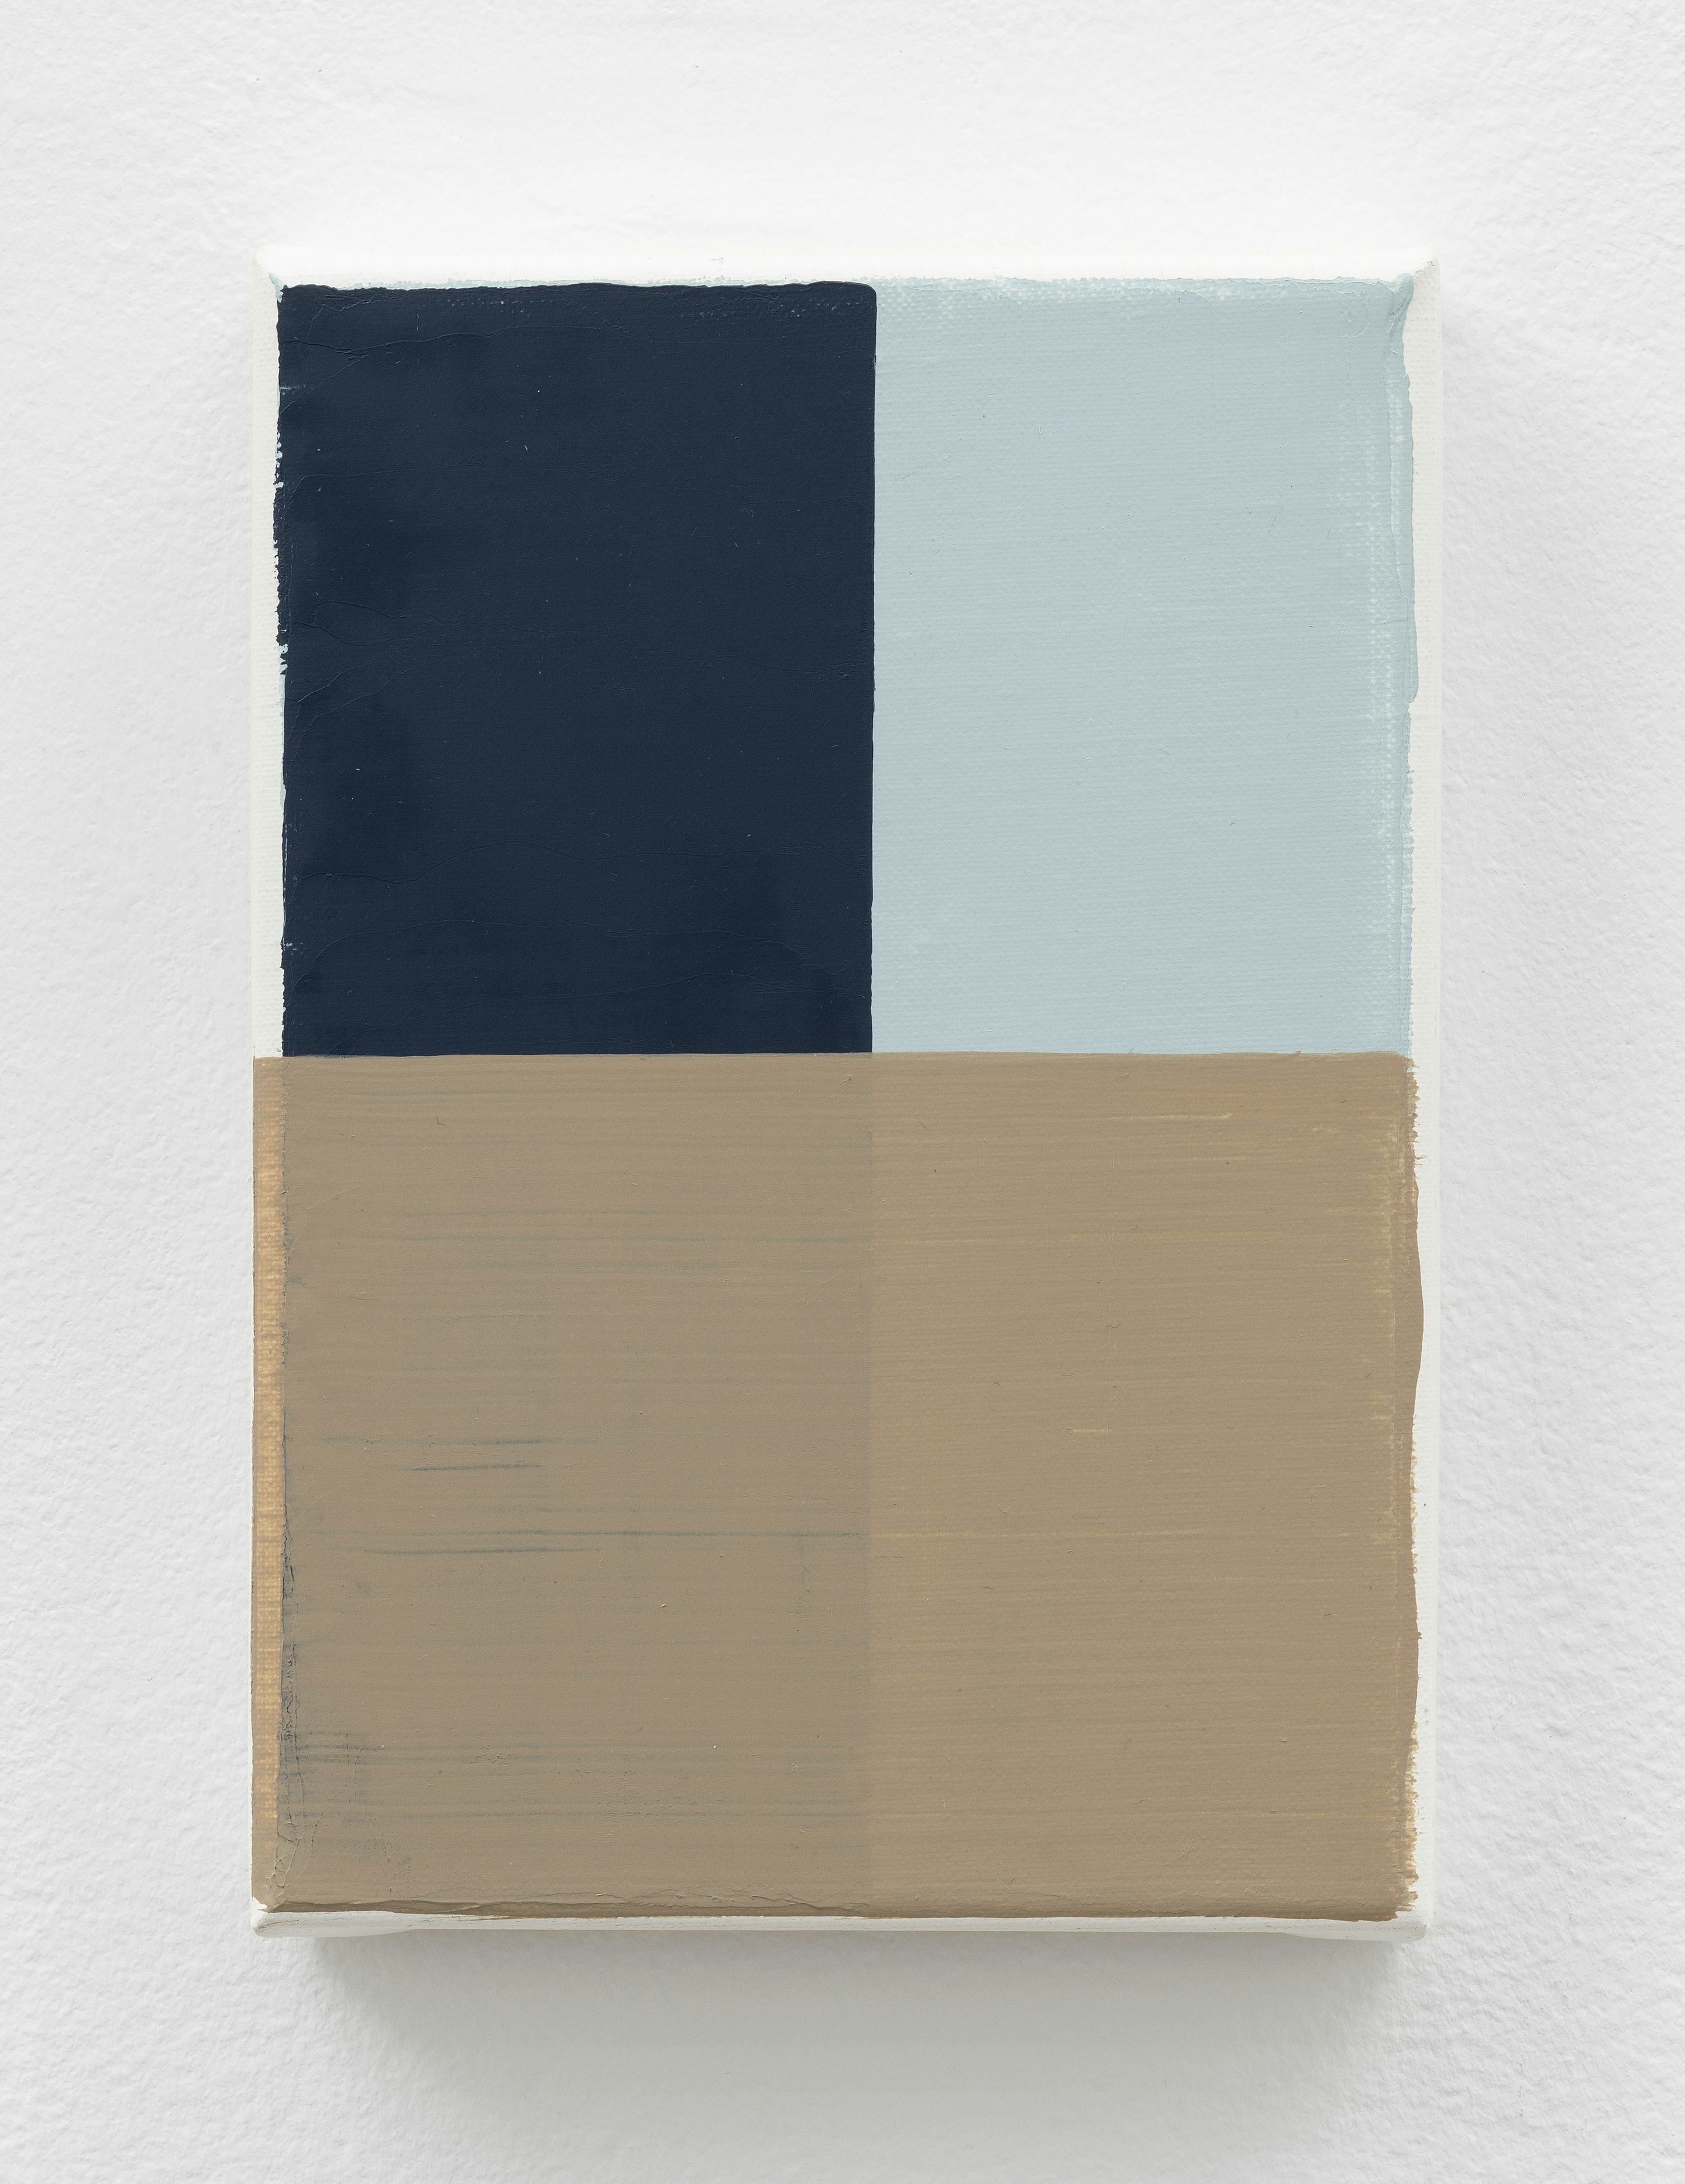 white (2021)
Oil on canvas. 7h x 5w inches (18h x 12.7w cm)